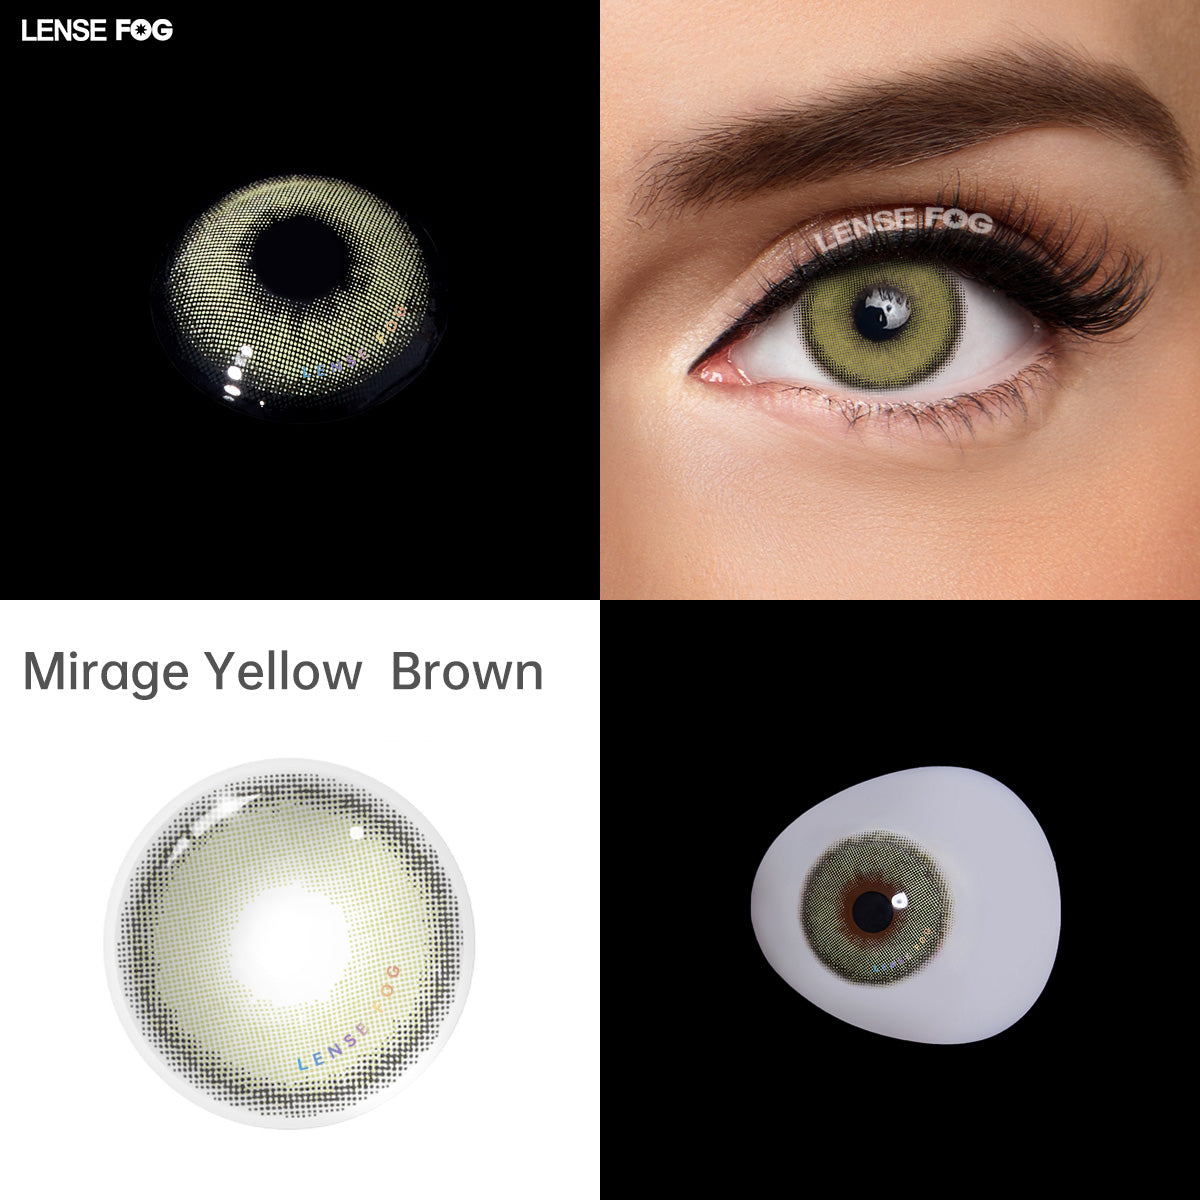 Mirage Yellow Brown